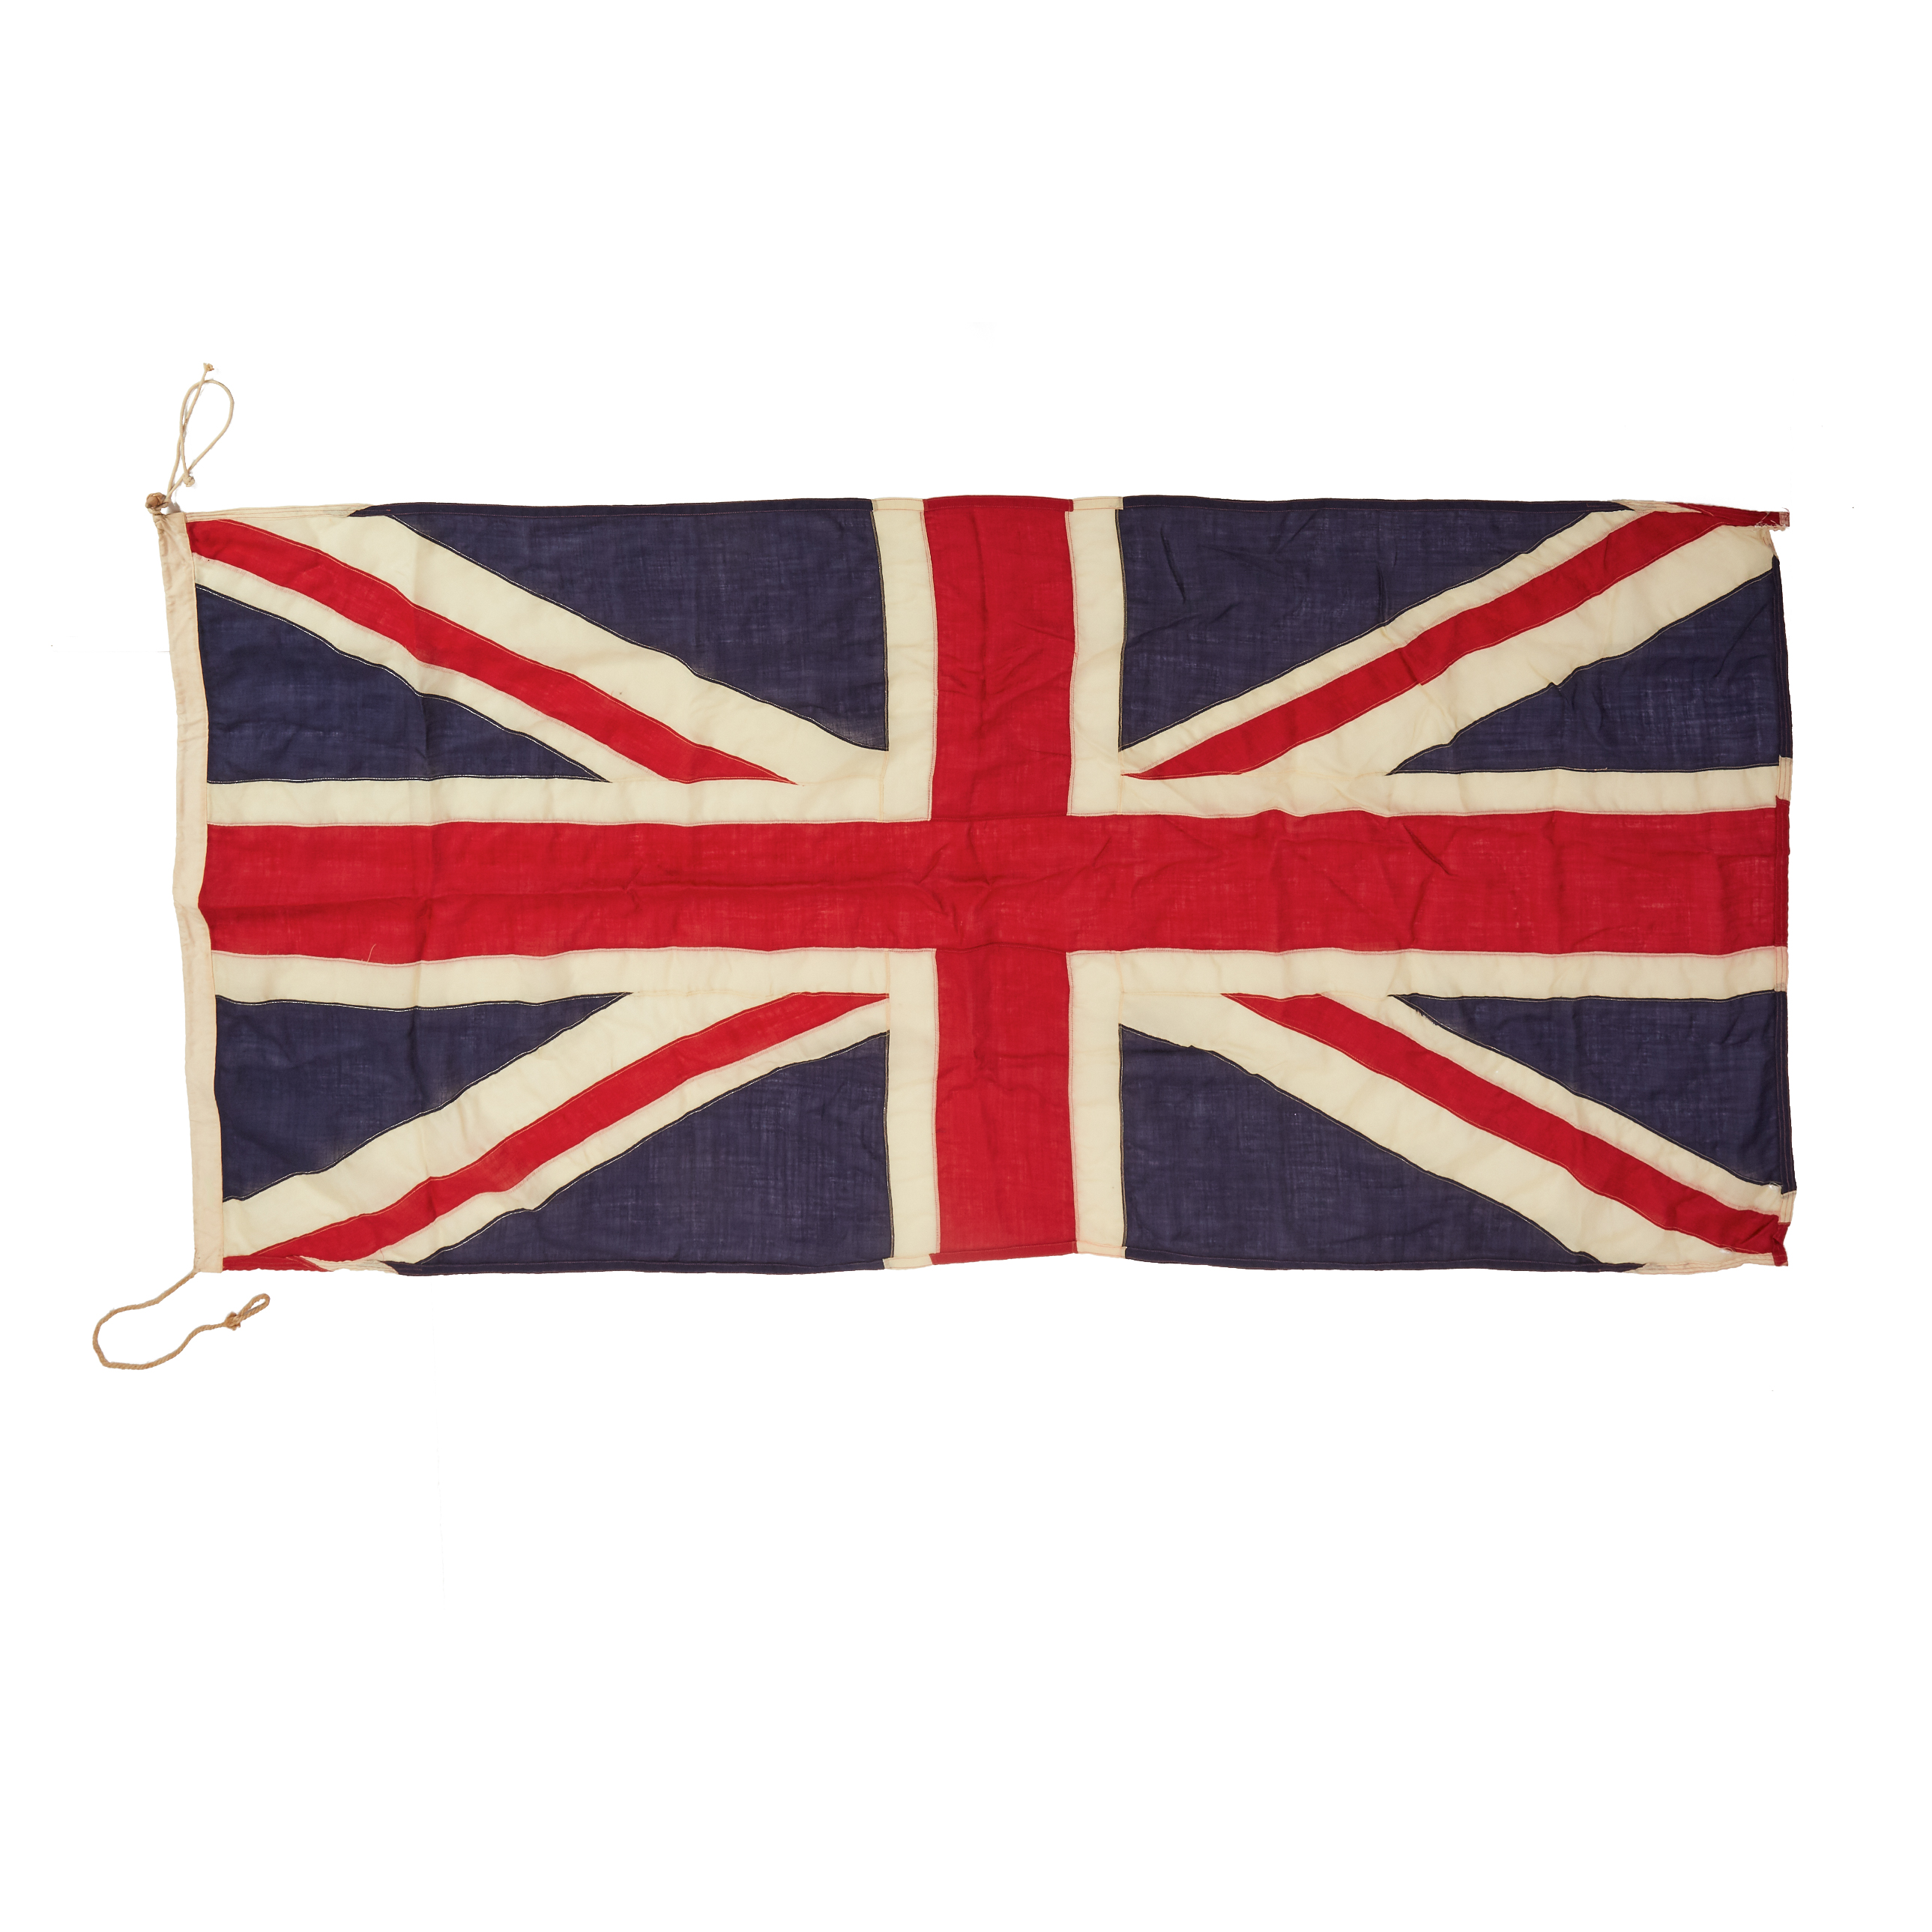 Royal Union Flag (Union Jack), early-mid 20th century